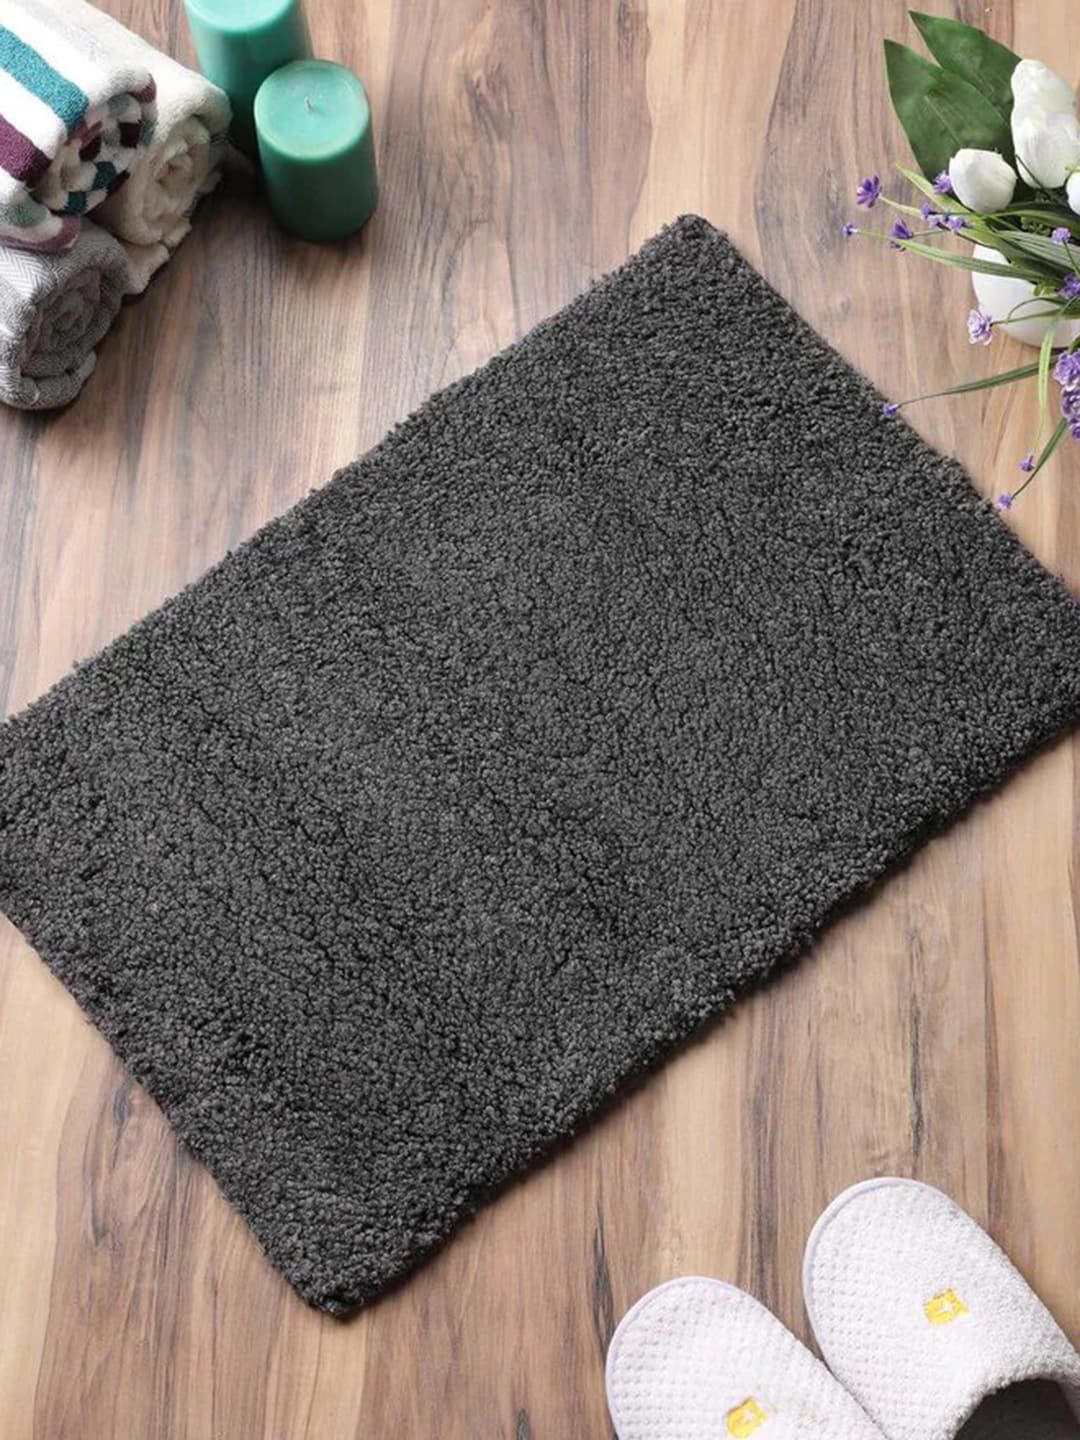 Gallery99 Grey Furry Cotton Anti-Skid Doormat Price in India